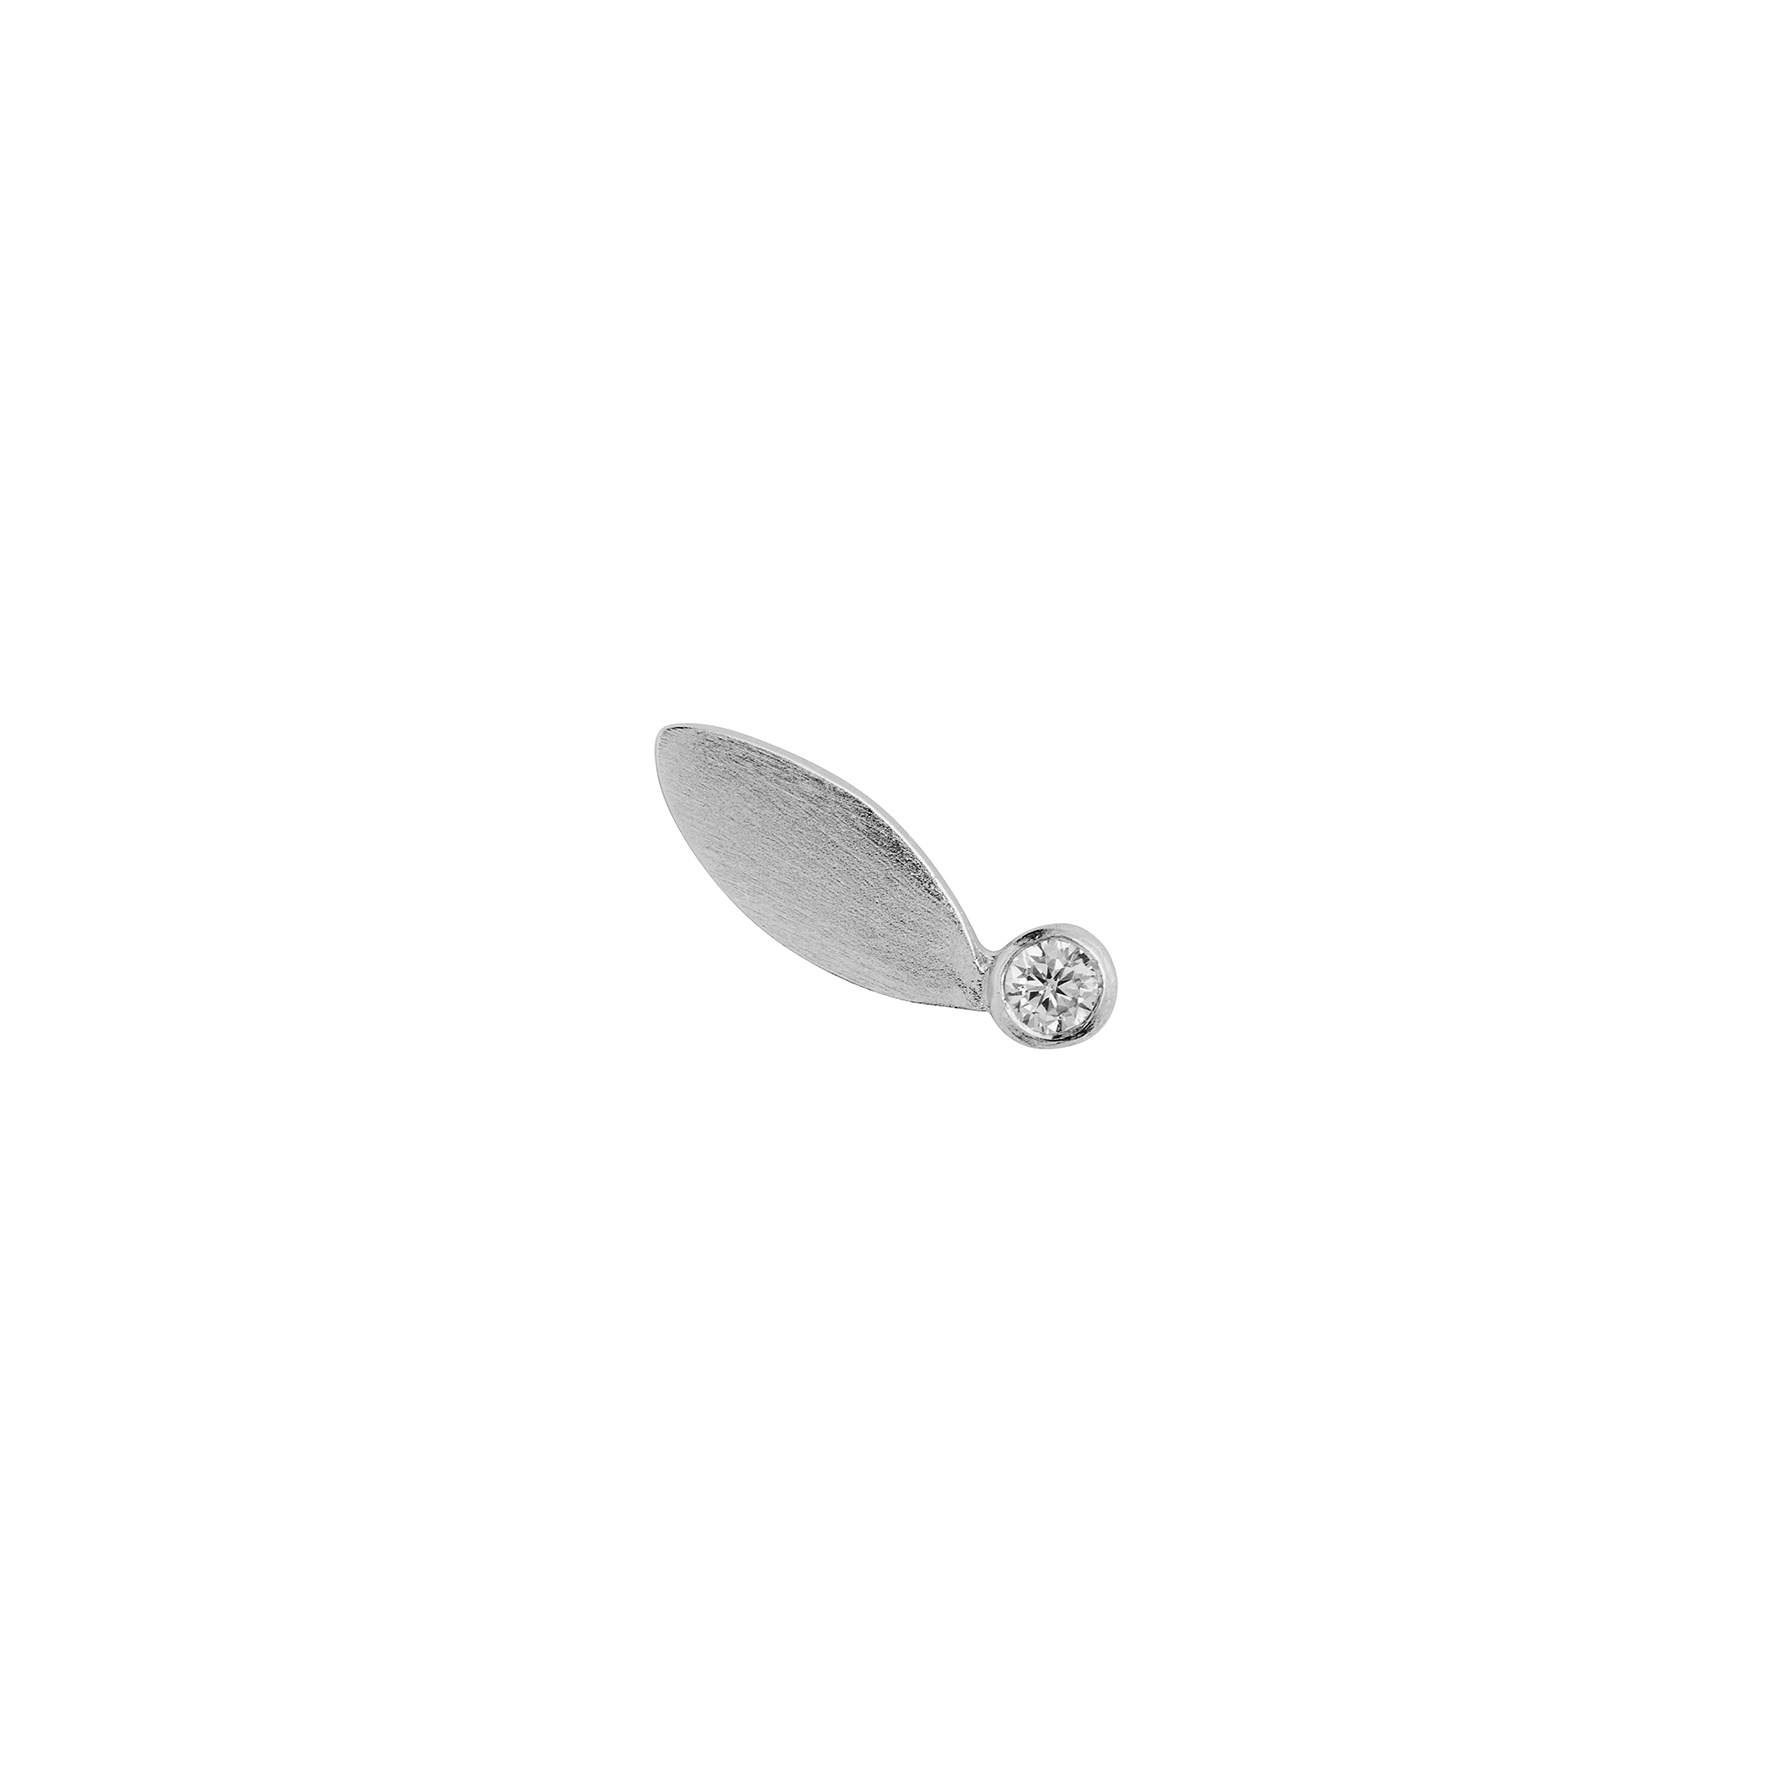 Big Dot Leaf Earstick Light Peridot fra STINE A Jewelry i Sølv Sterling 925